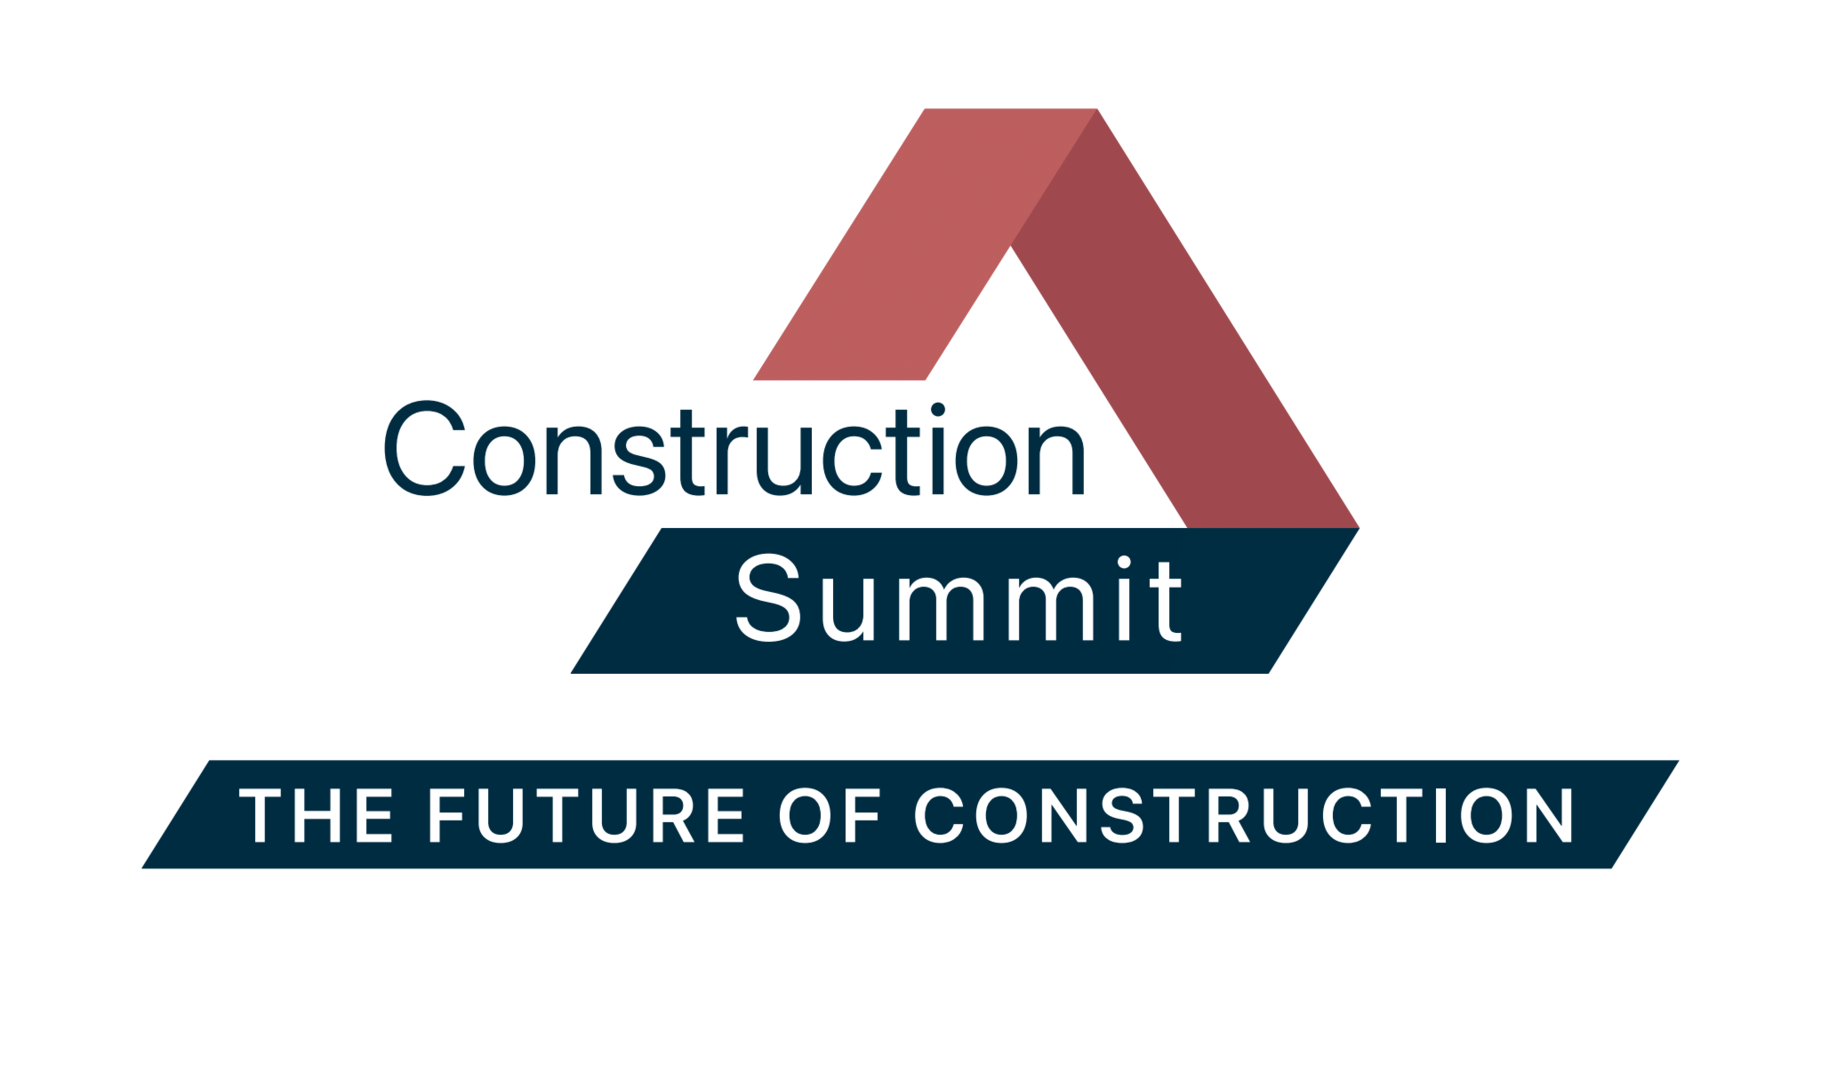 Construction Summit